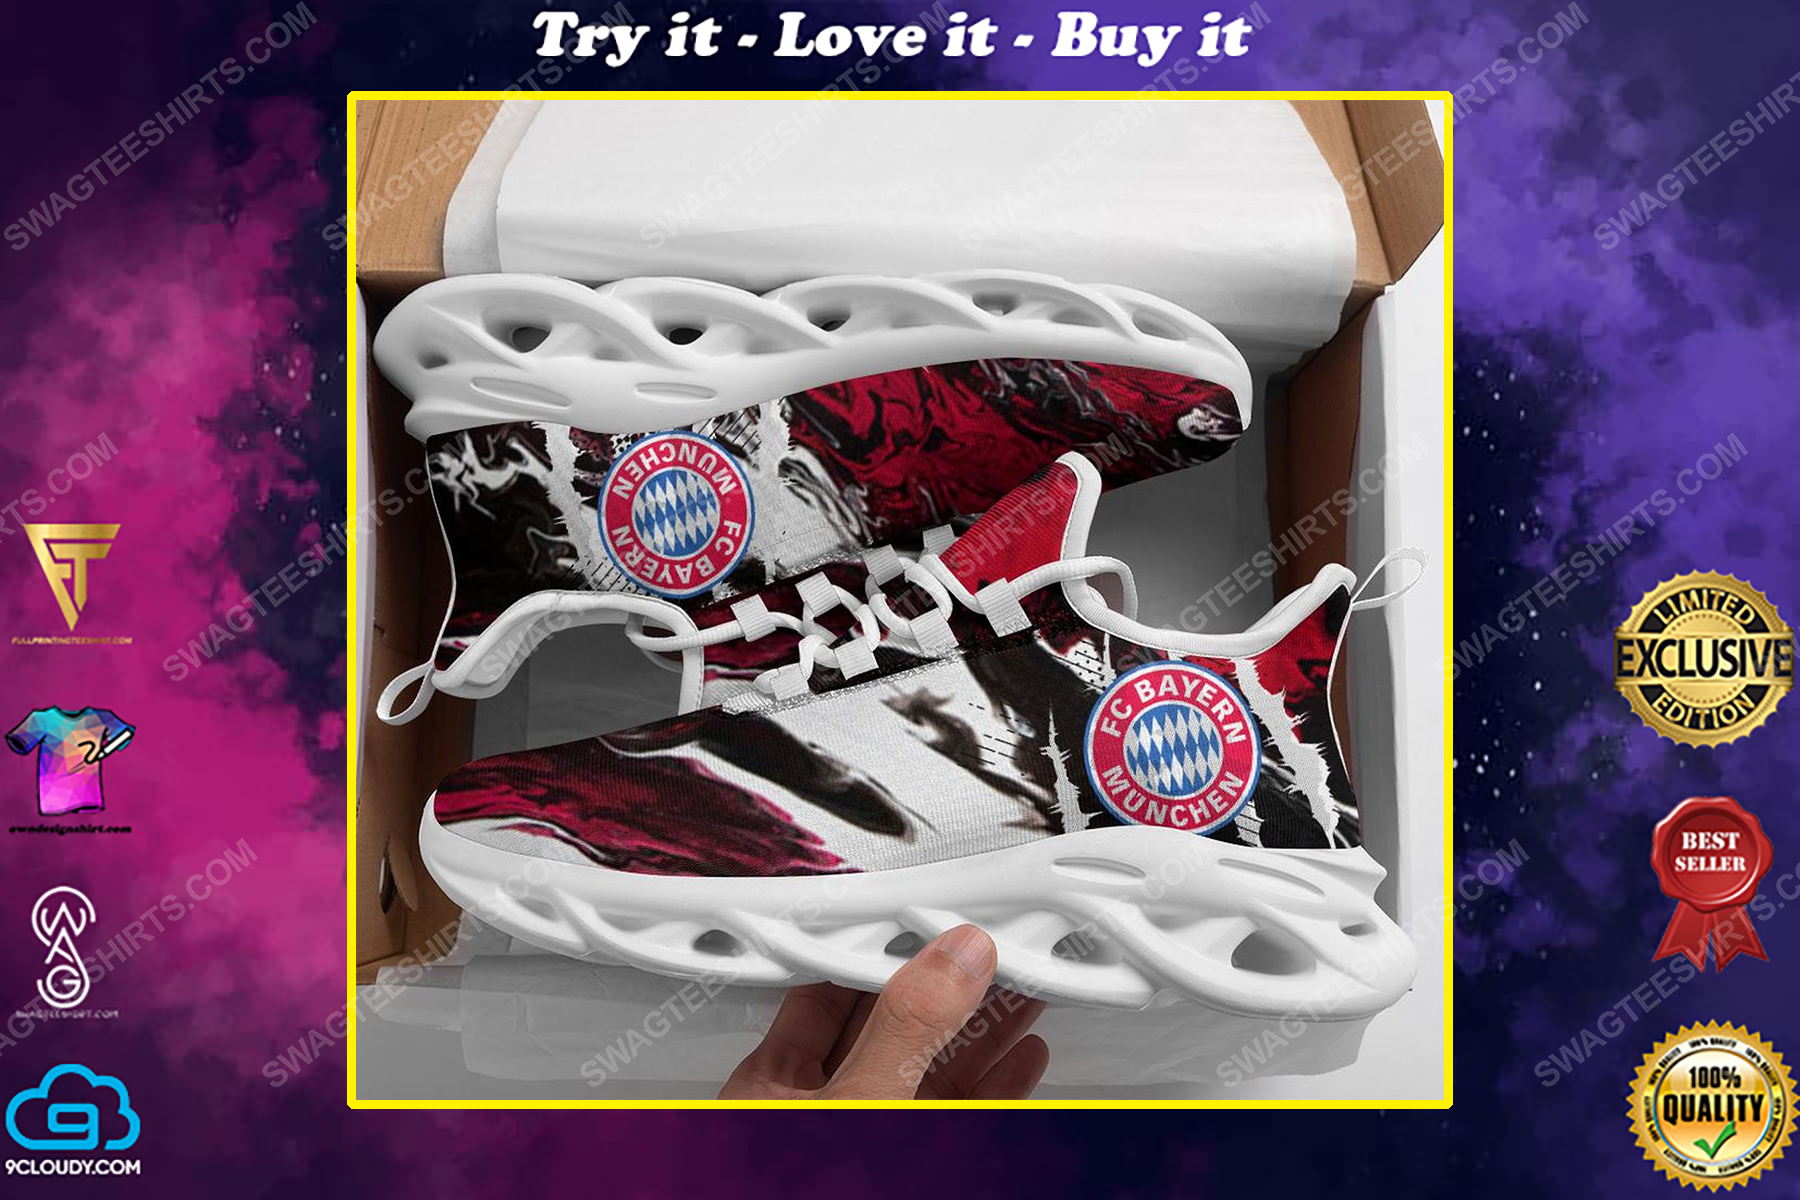 The bayern munich football club max soul shoes